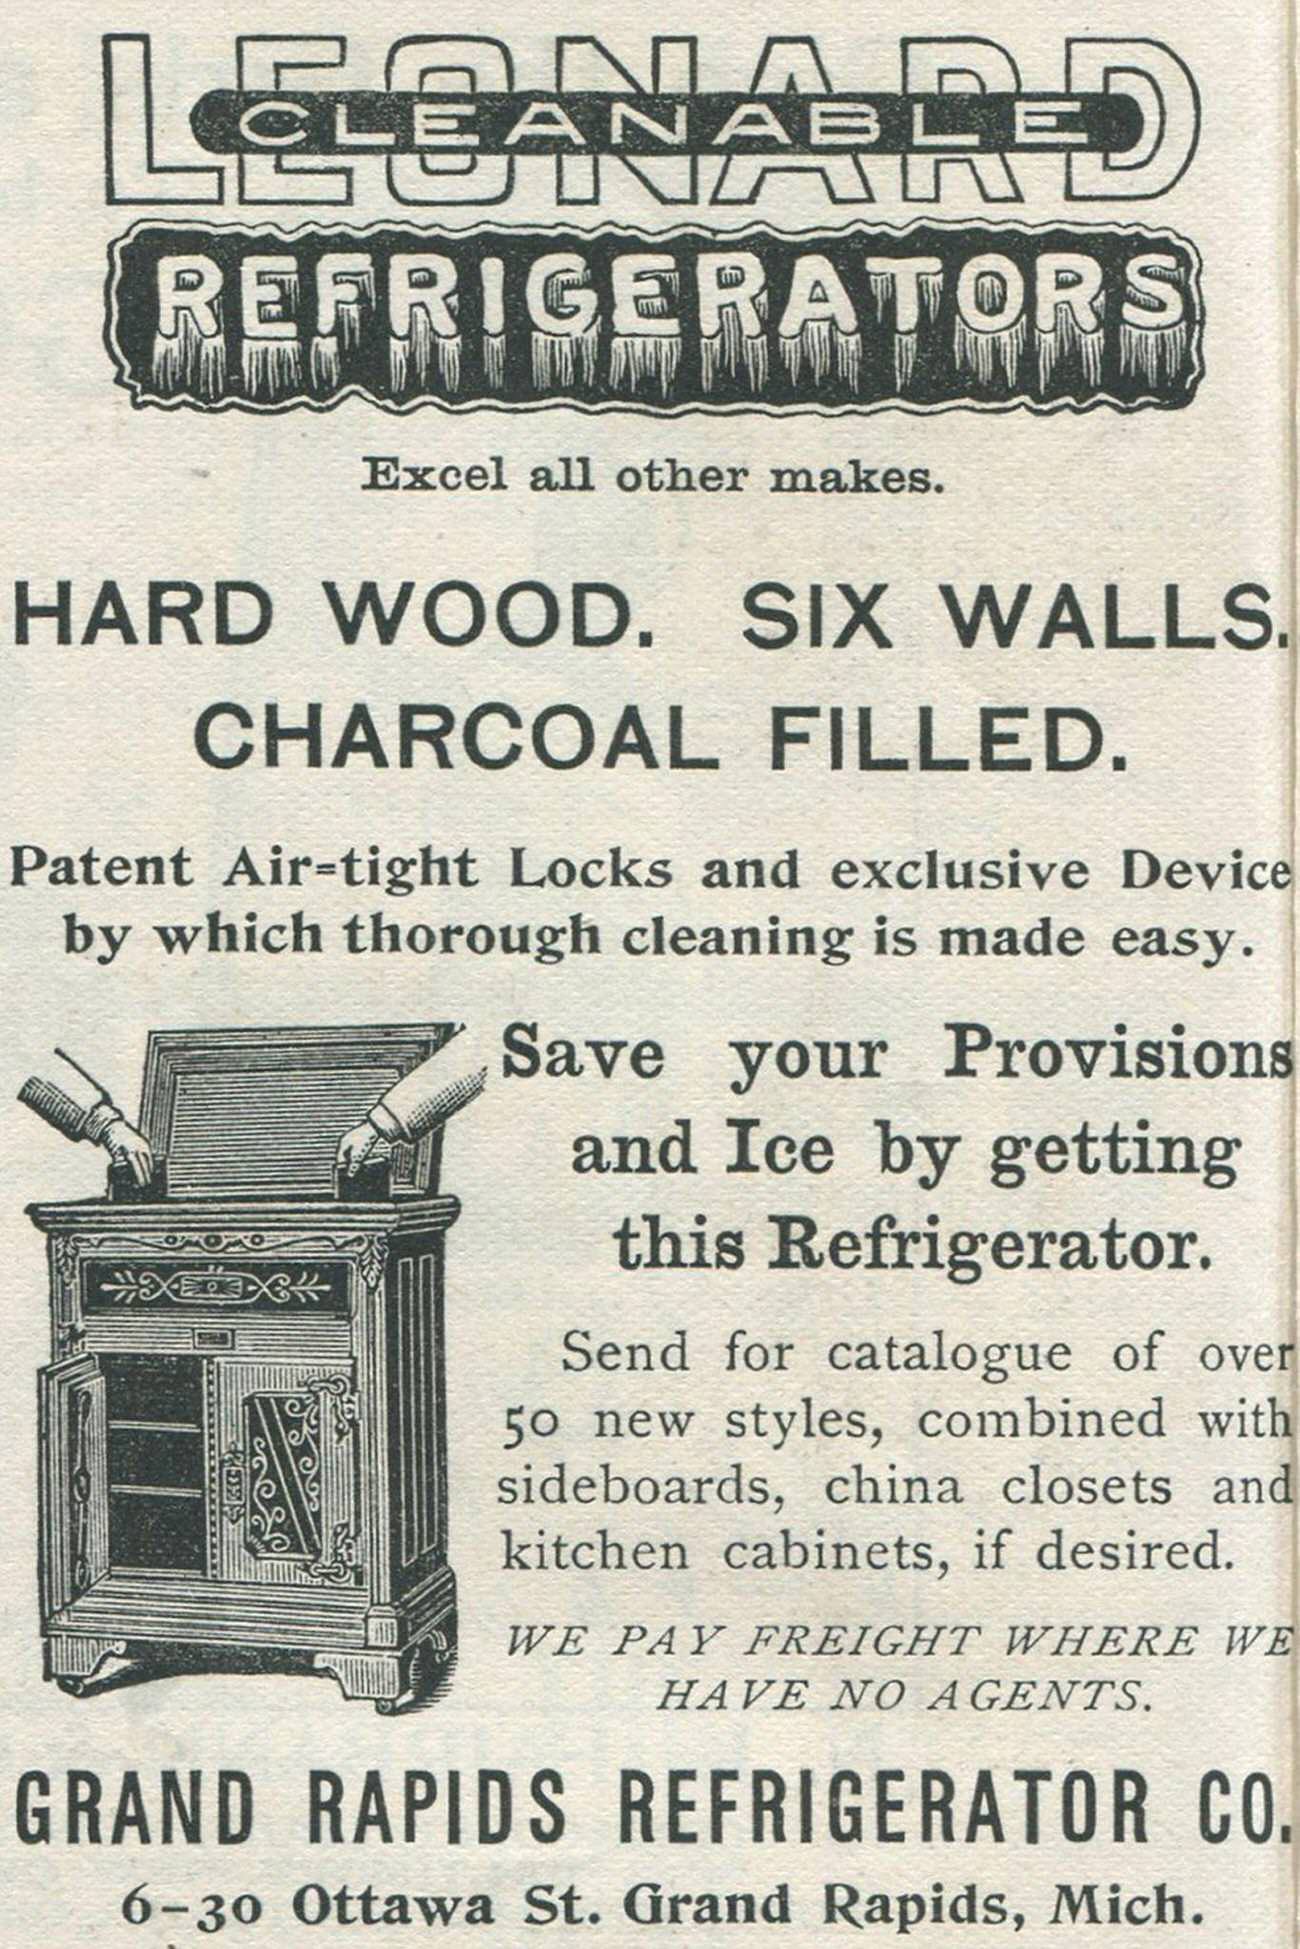 Leonard Cleanable Refrigerators ad, Grand Rapids Refrigerator Company, 1892.